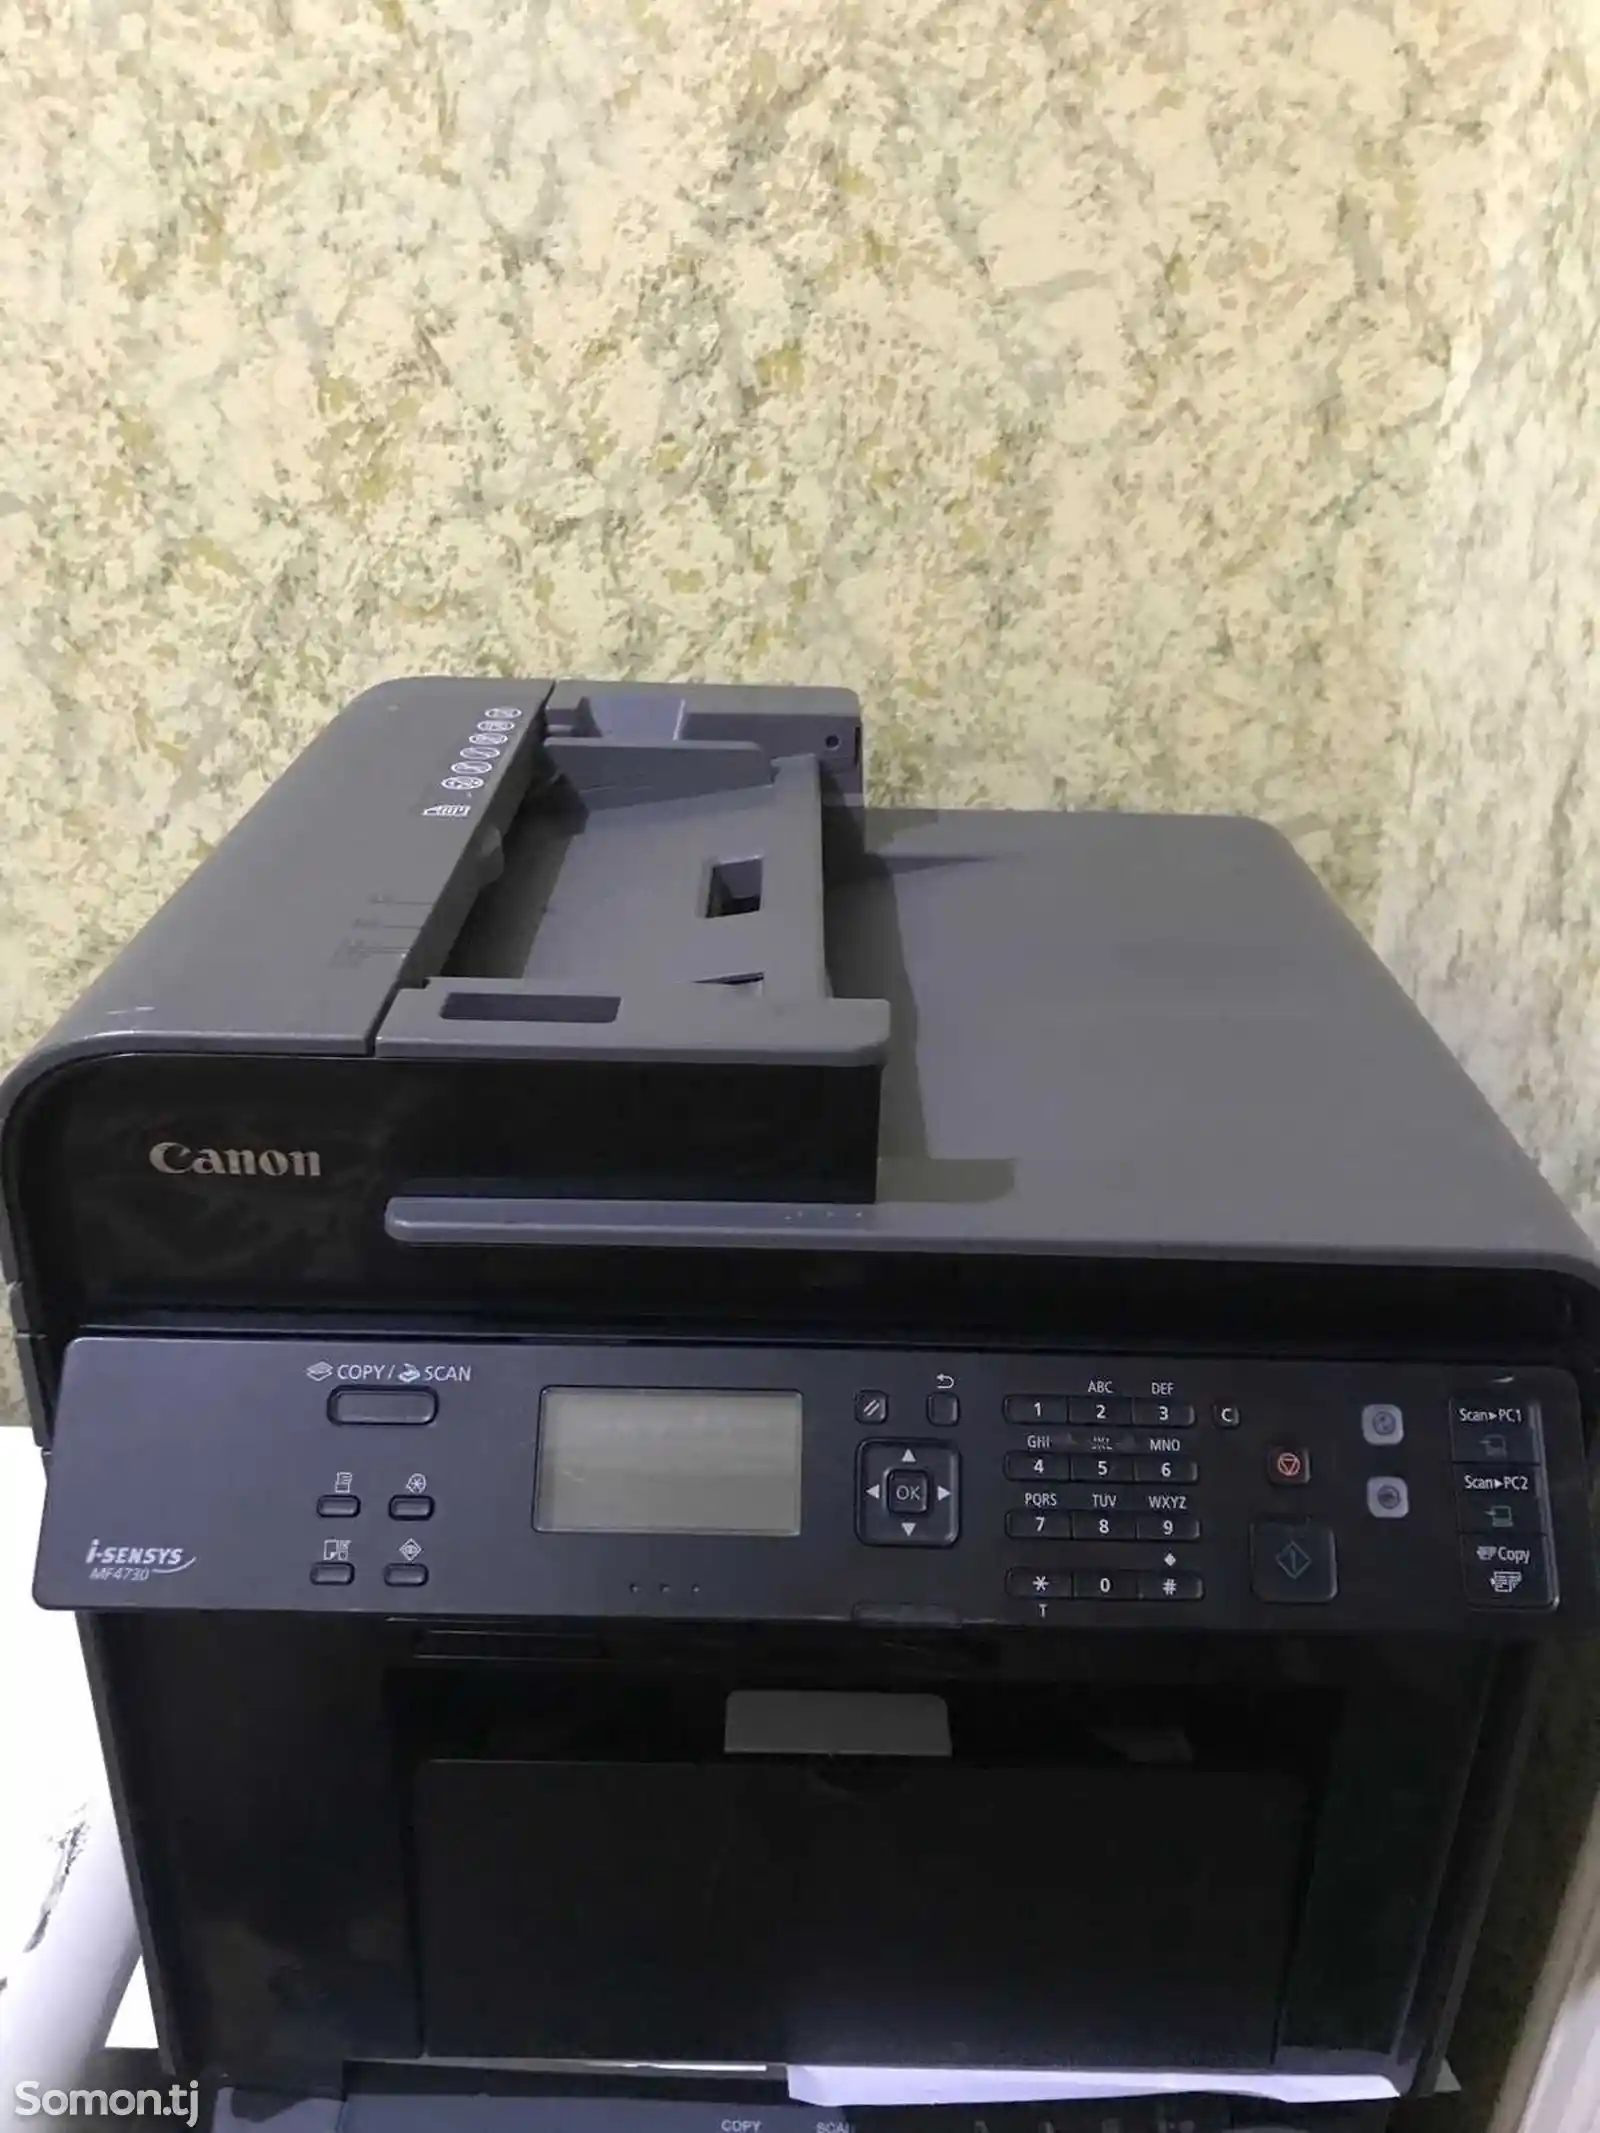 Принтер Canon mf4730 5в1-3